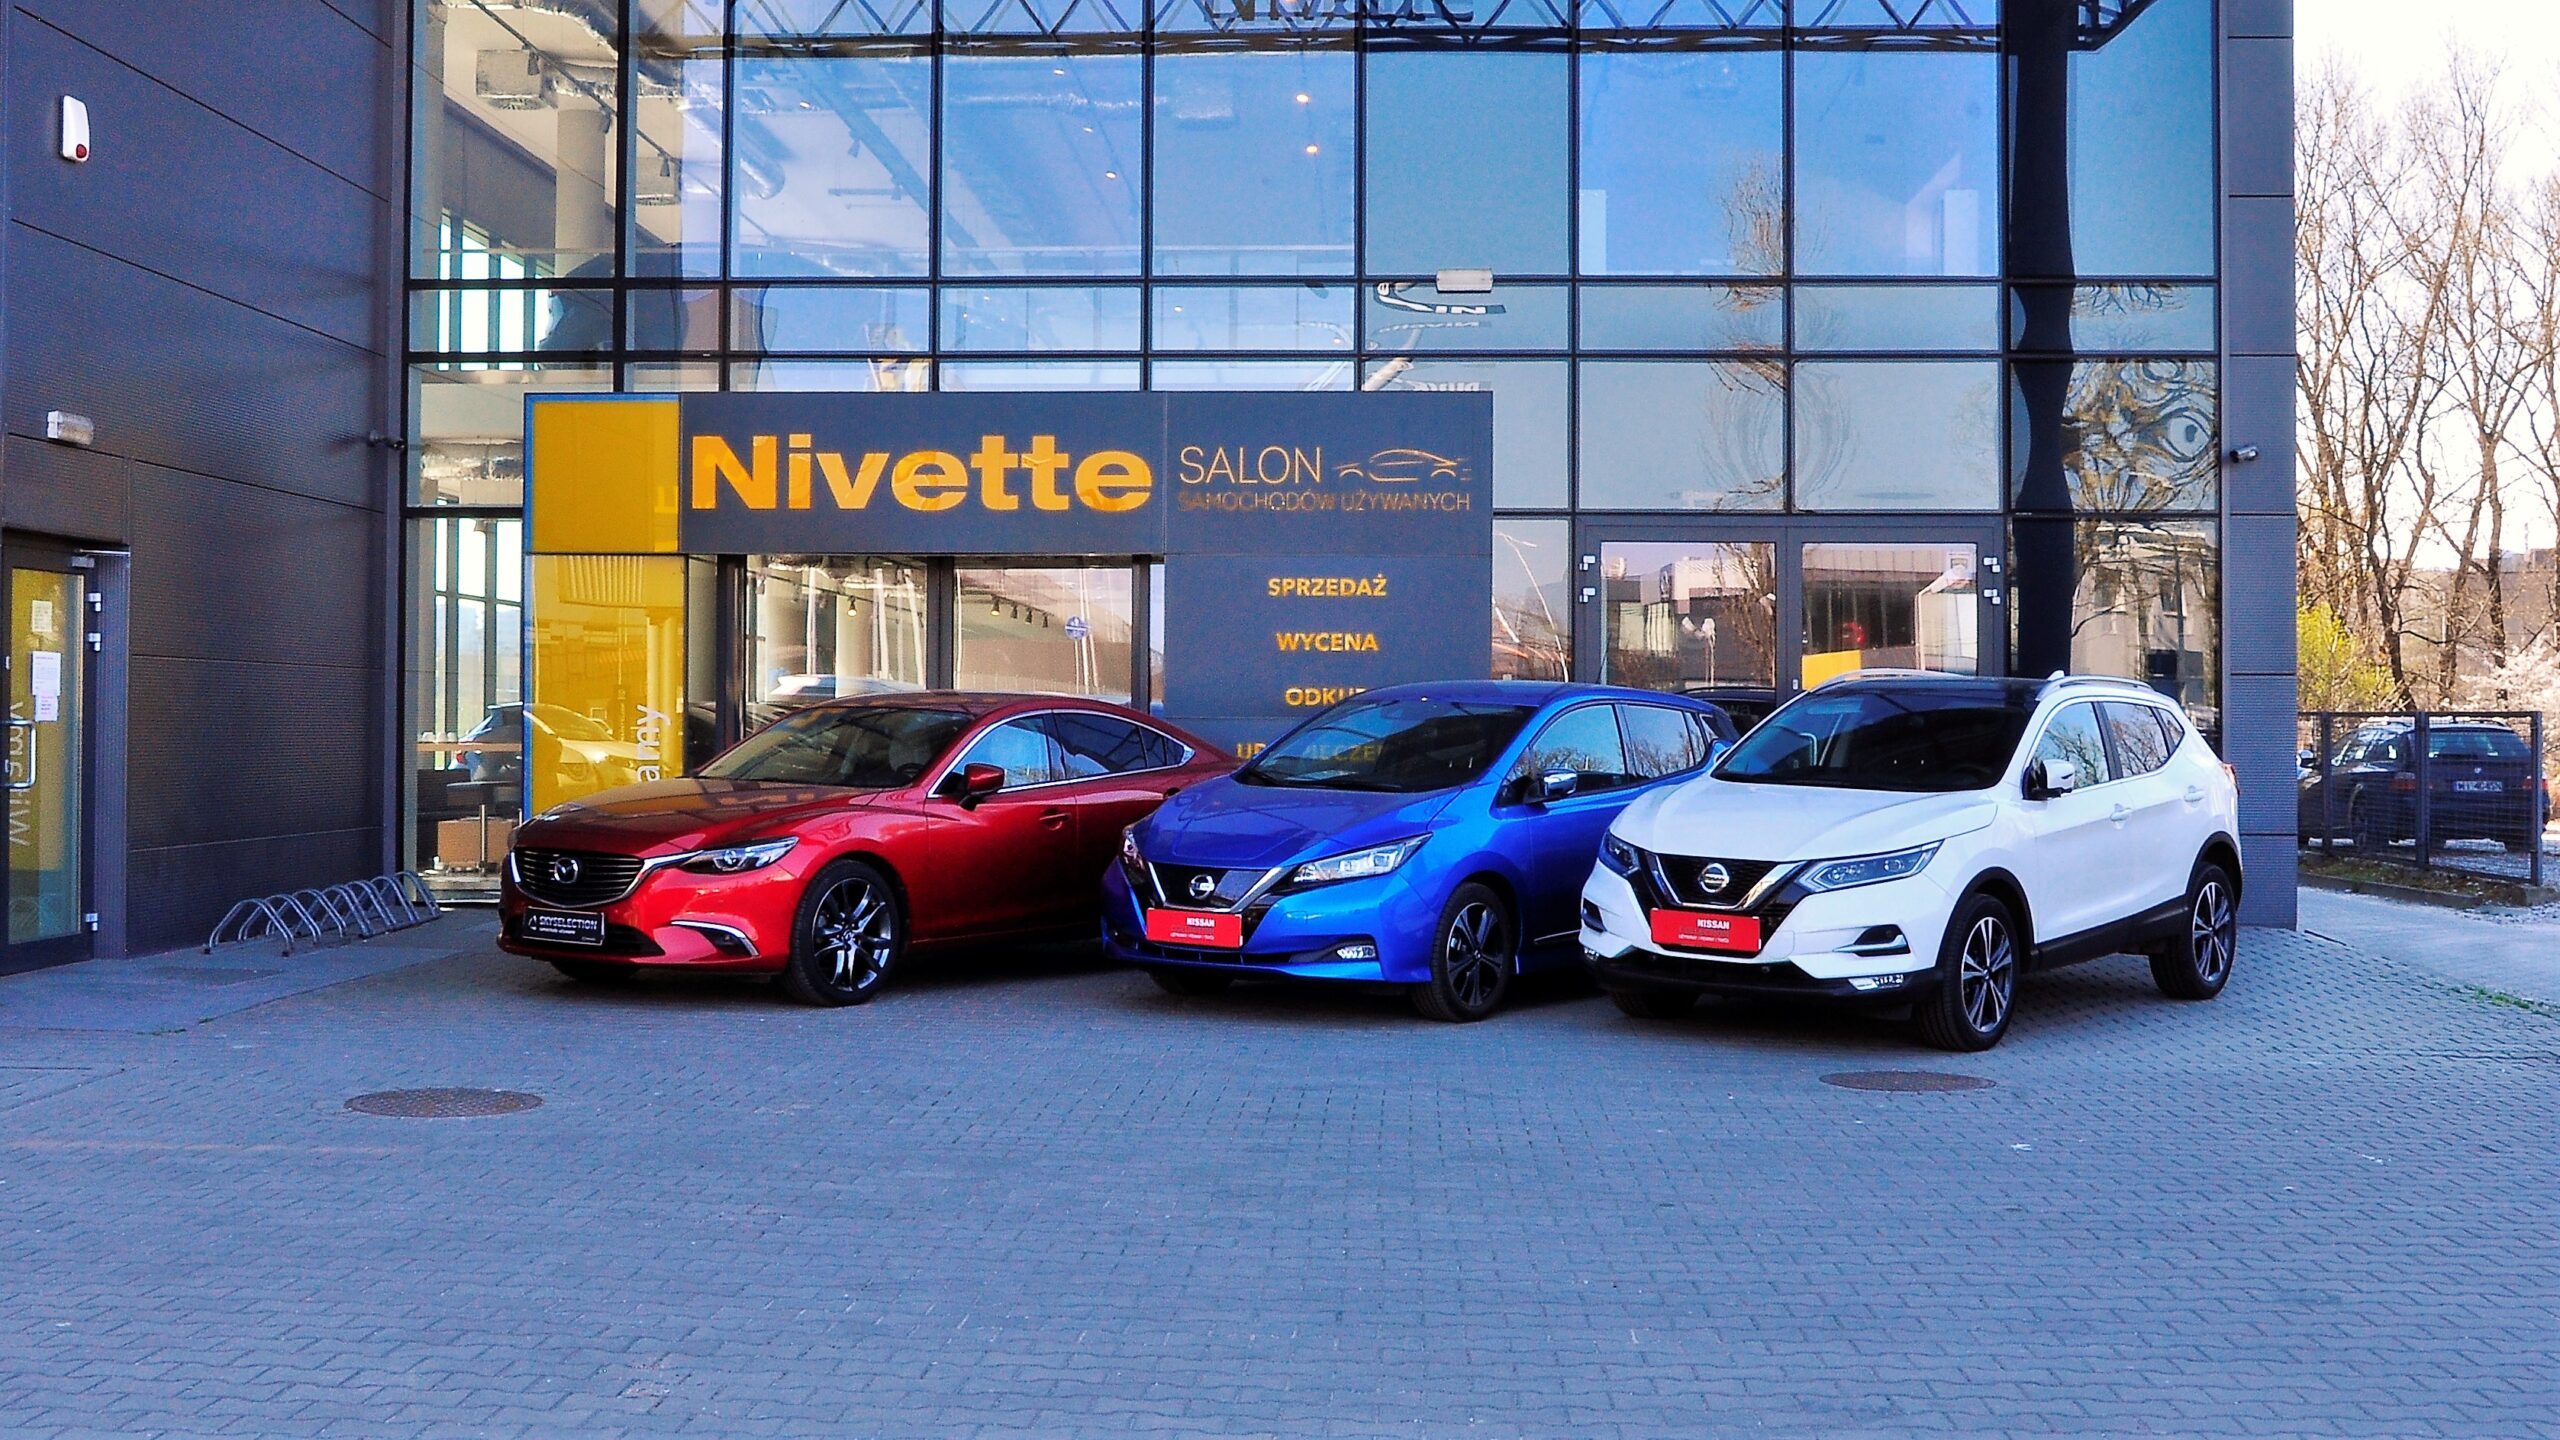 Salon Samochodów Używanych Grupa Nivette Grupa Nivette